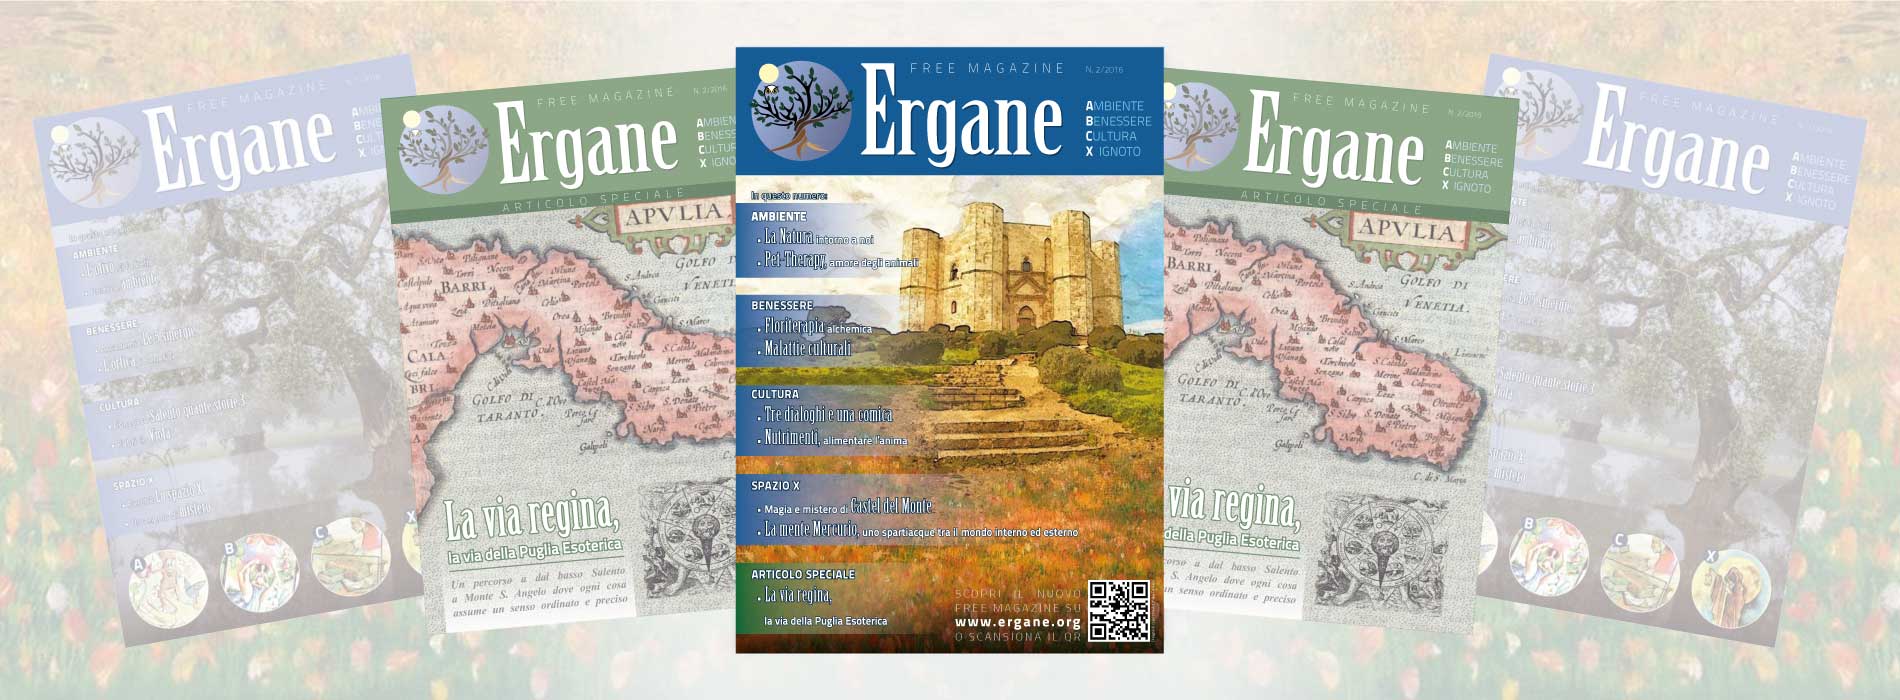 Ergane free magazine